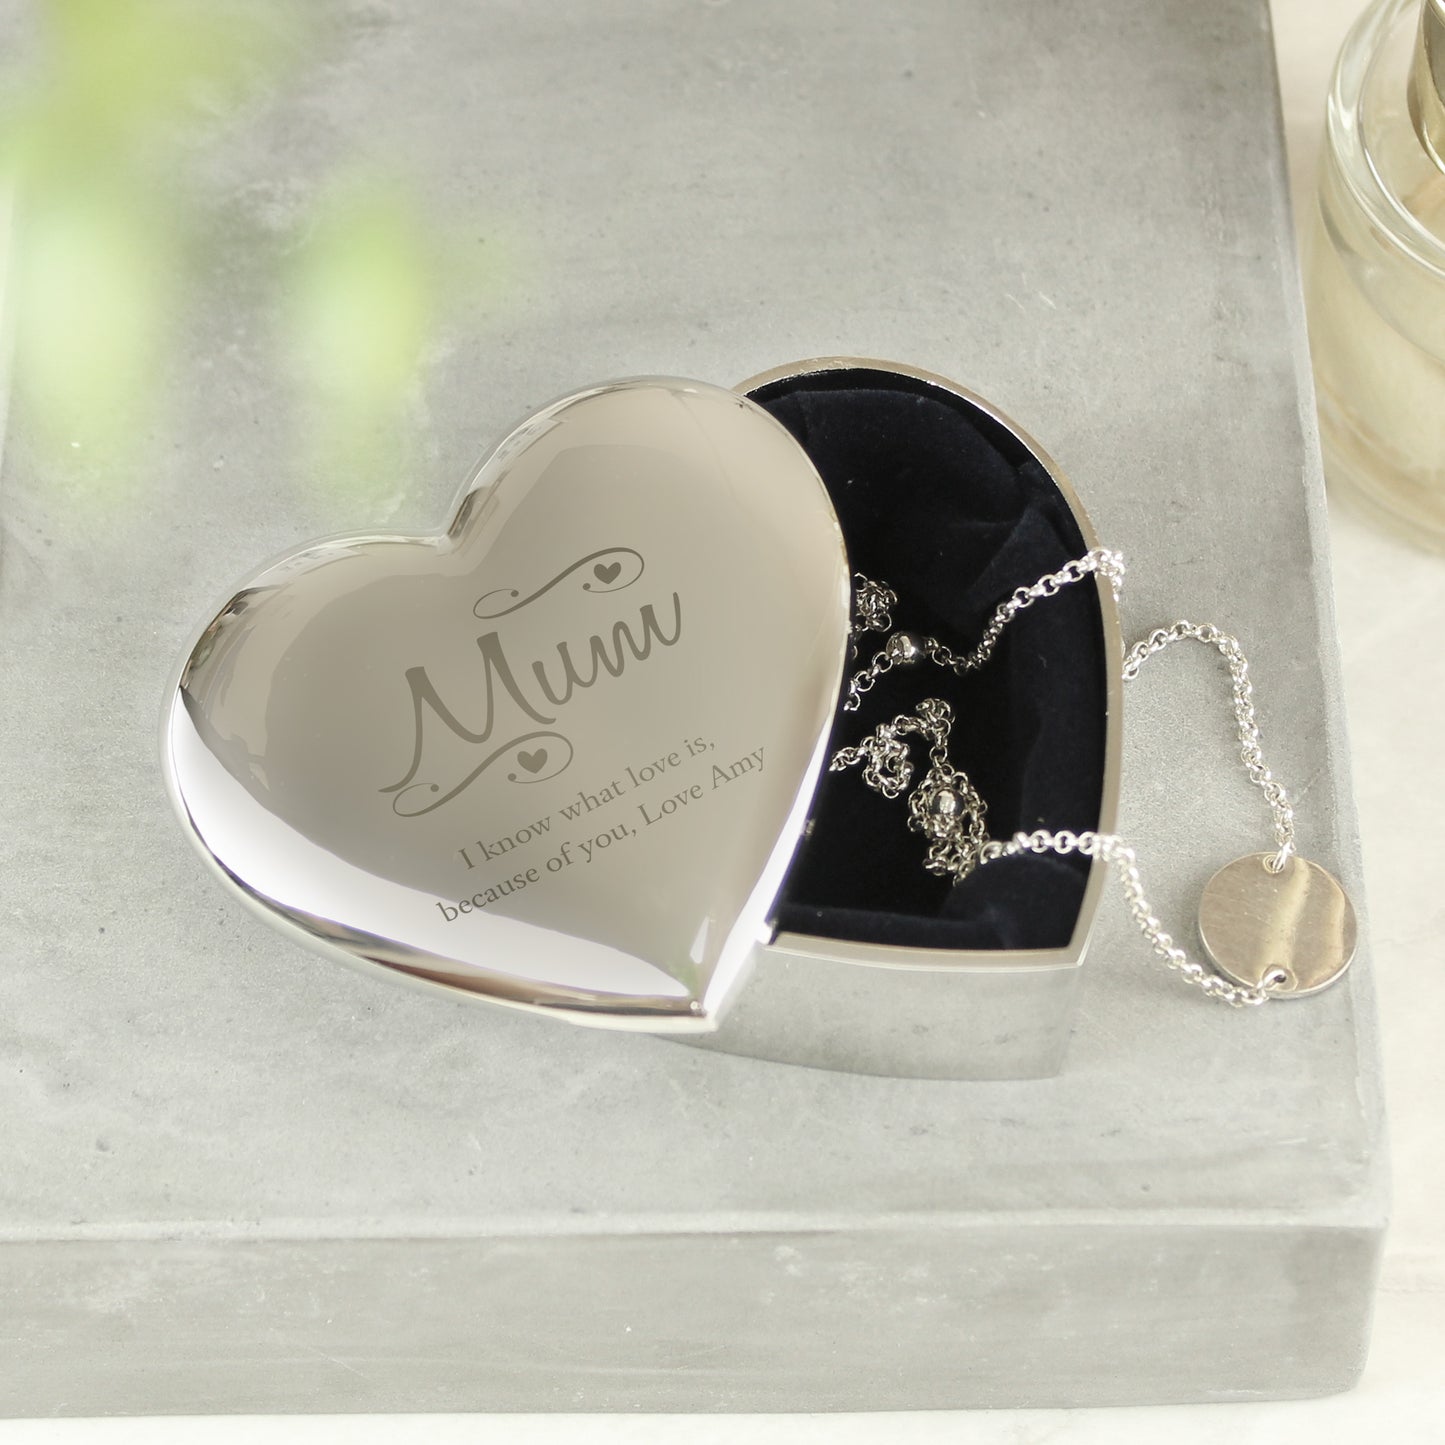 Personalised Mum Swirls & Hearts Trinket Box - Personalise It!